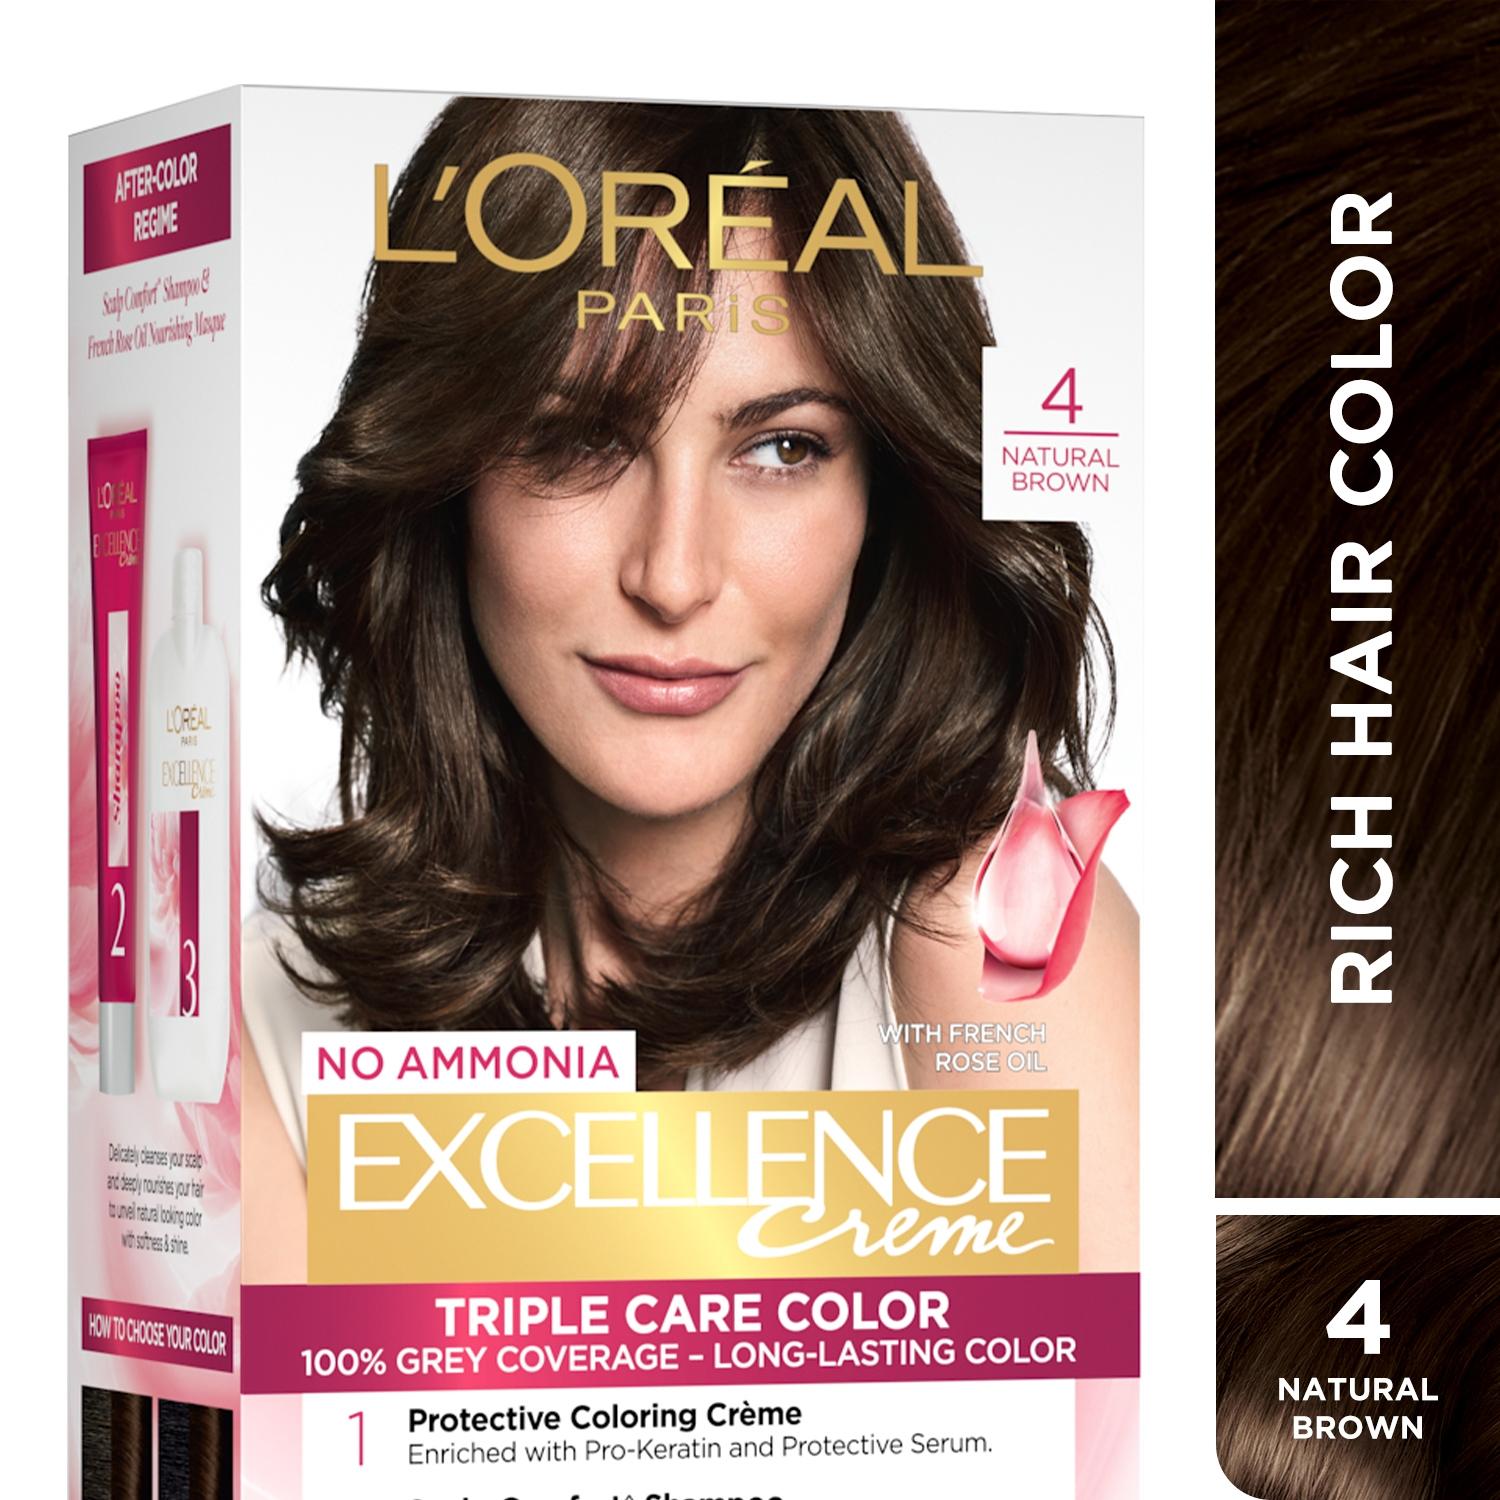 L'Oreal Paris Excellence Creme Hair Color, 4 Natural Brown -72ml+100g